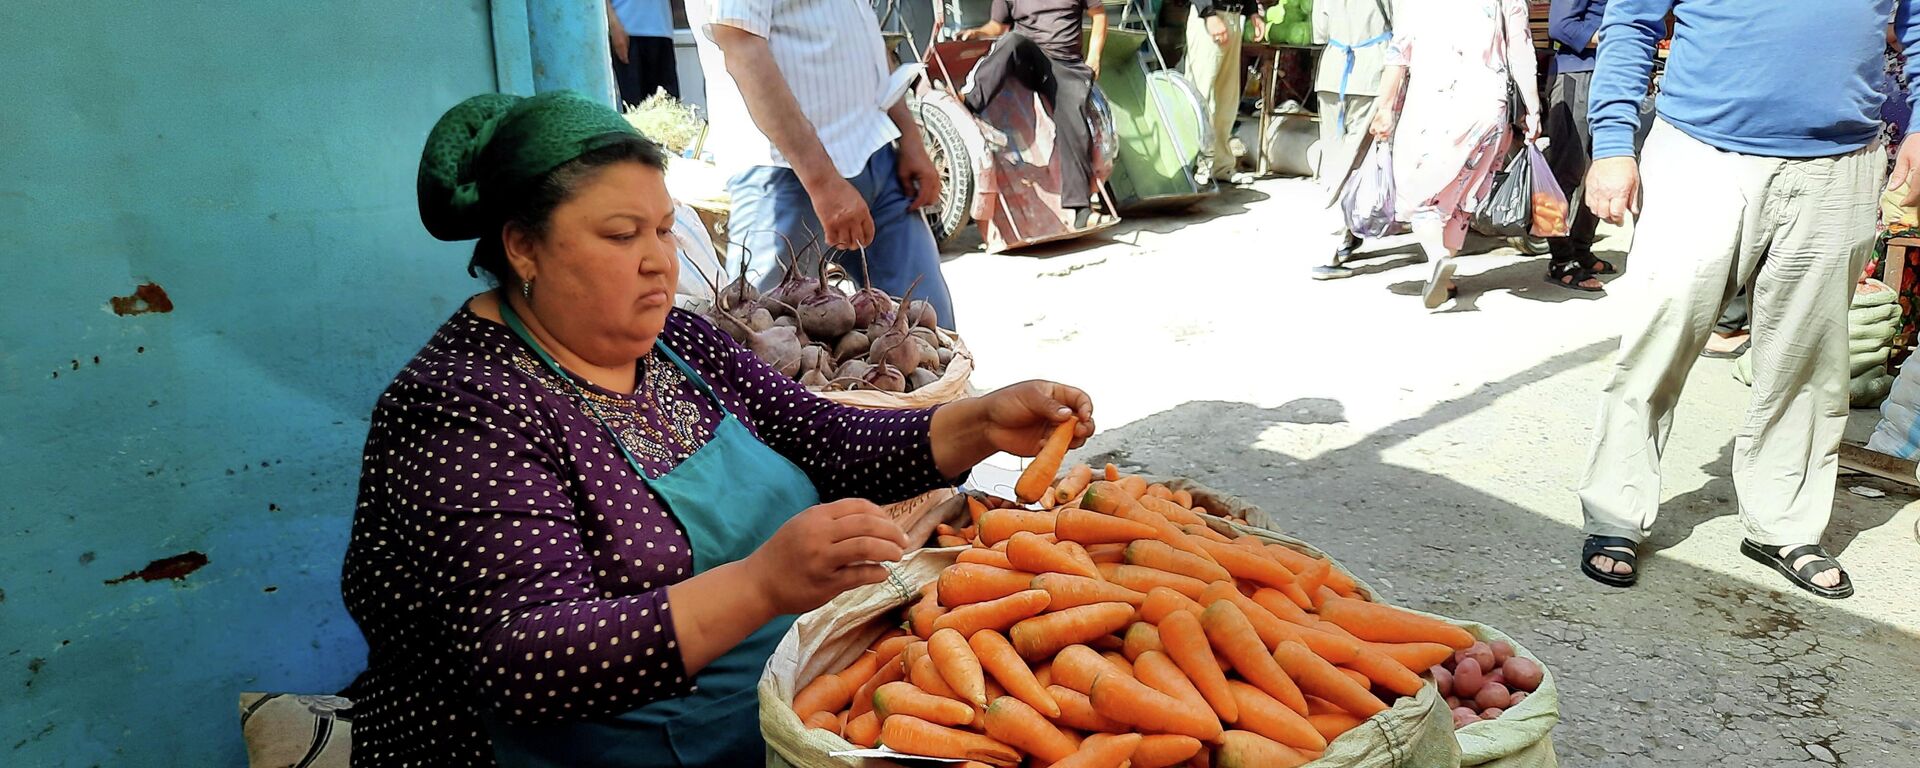 Торговля морковью на рынке в Худжанде - Sputnik Таджикистан, 1920, 27.05.2021